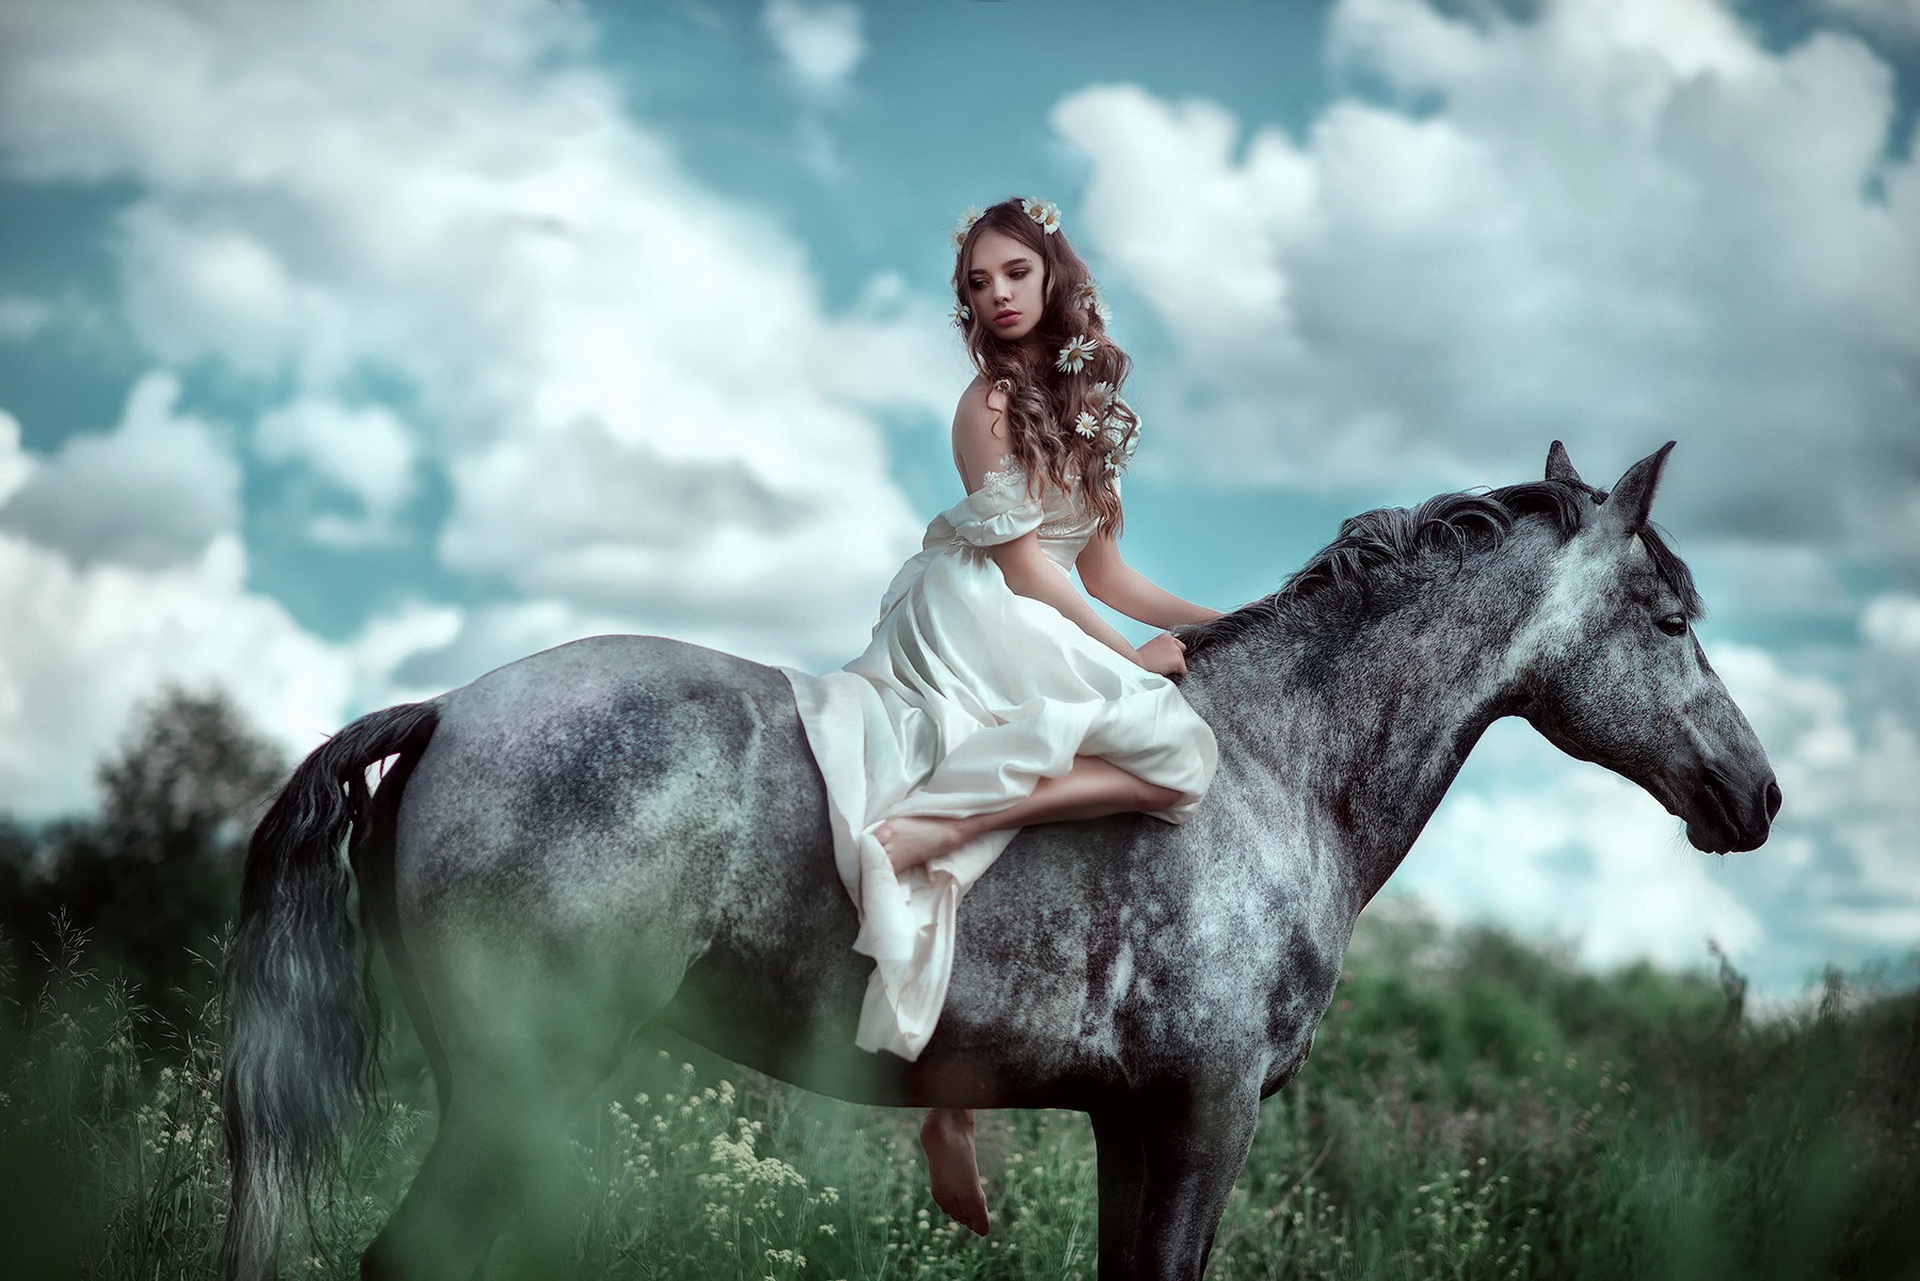 На сером коне. Фотосессия с лошадьми. Девушка на коне. Девушка с лошадью. Верхом на лошади.